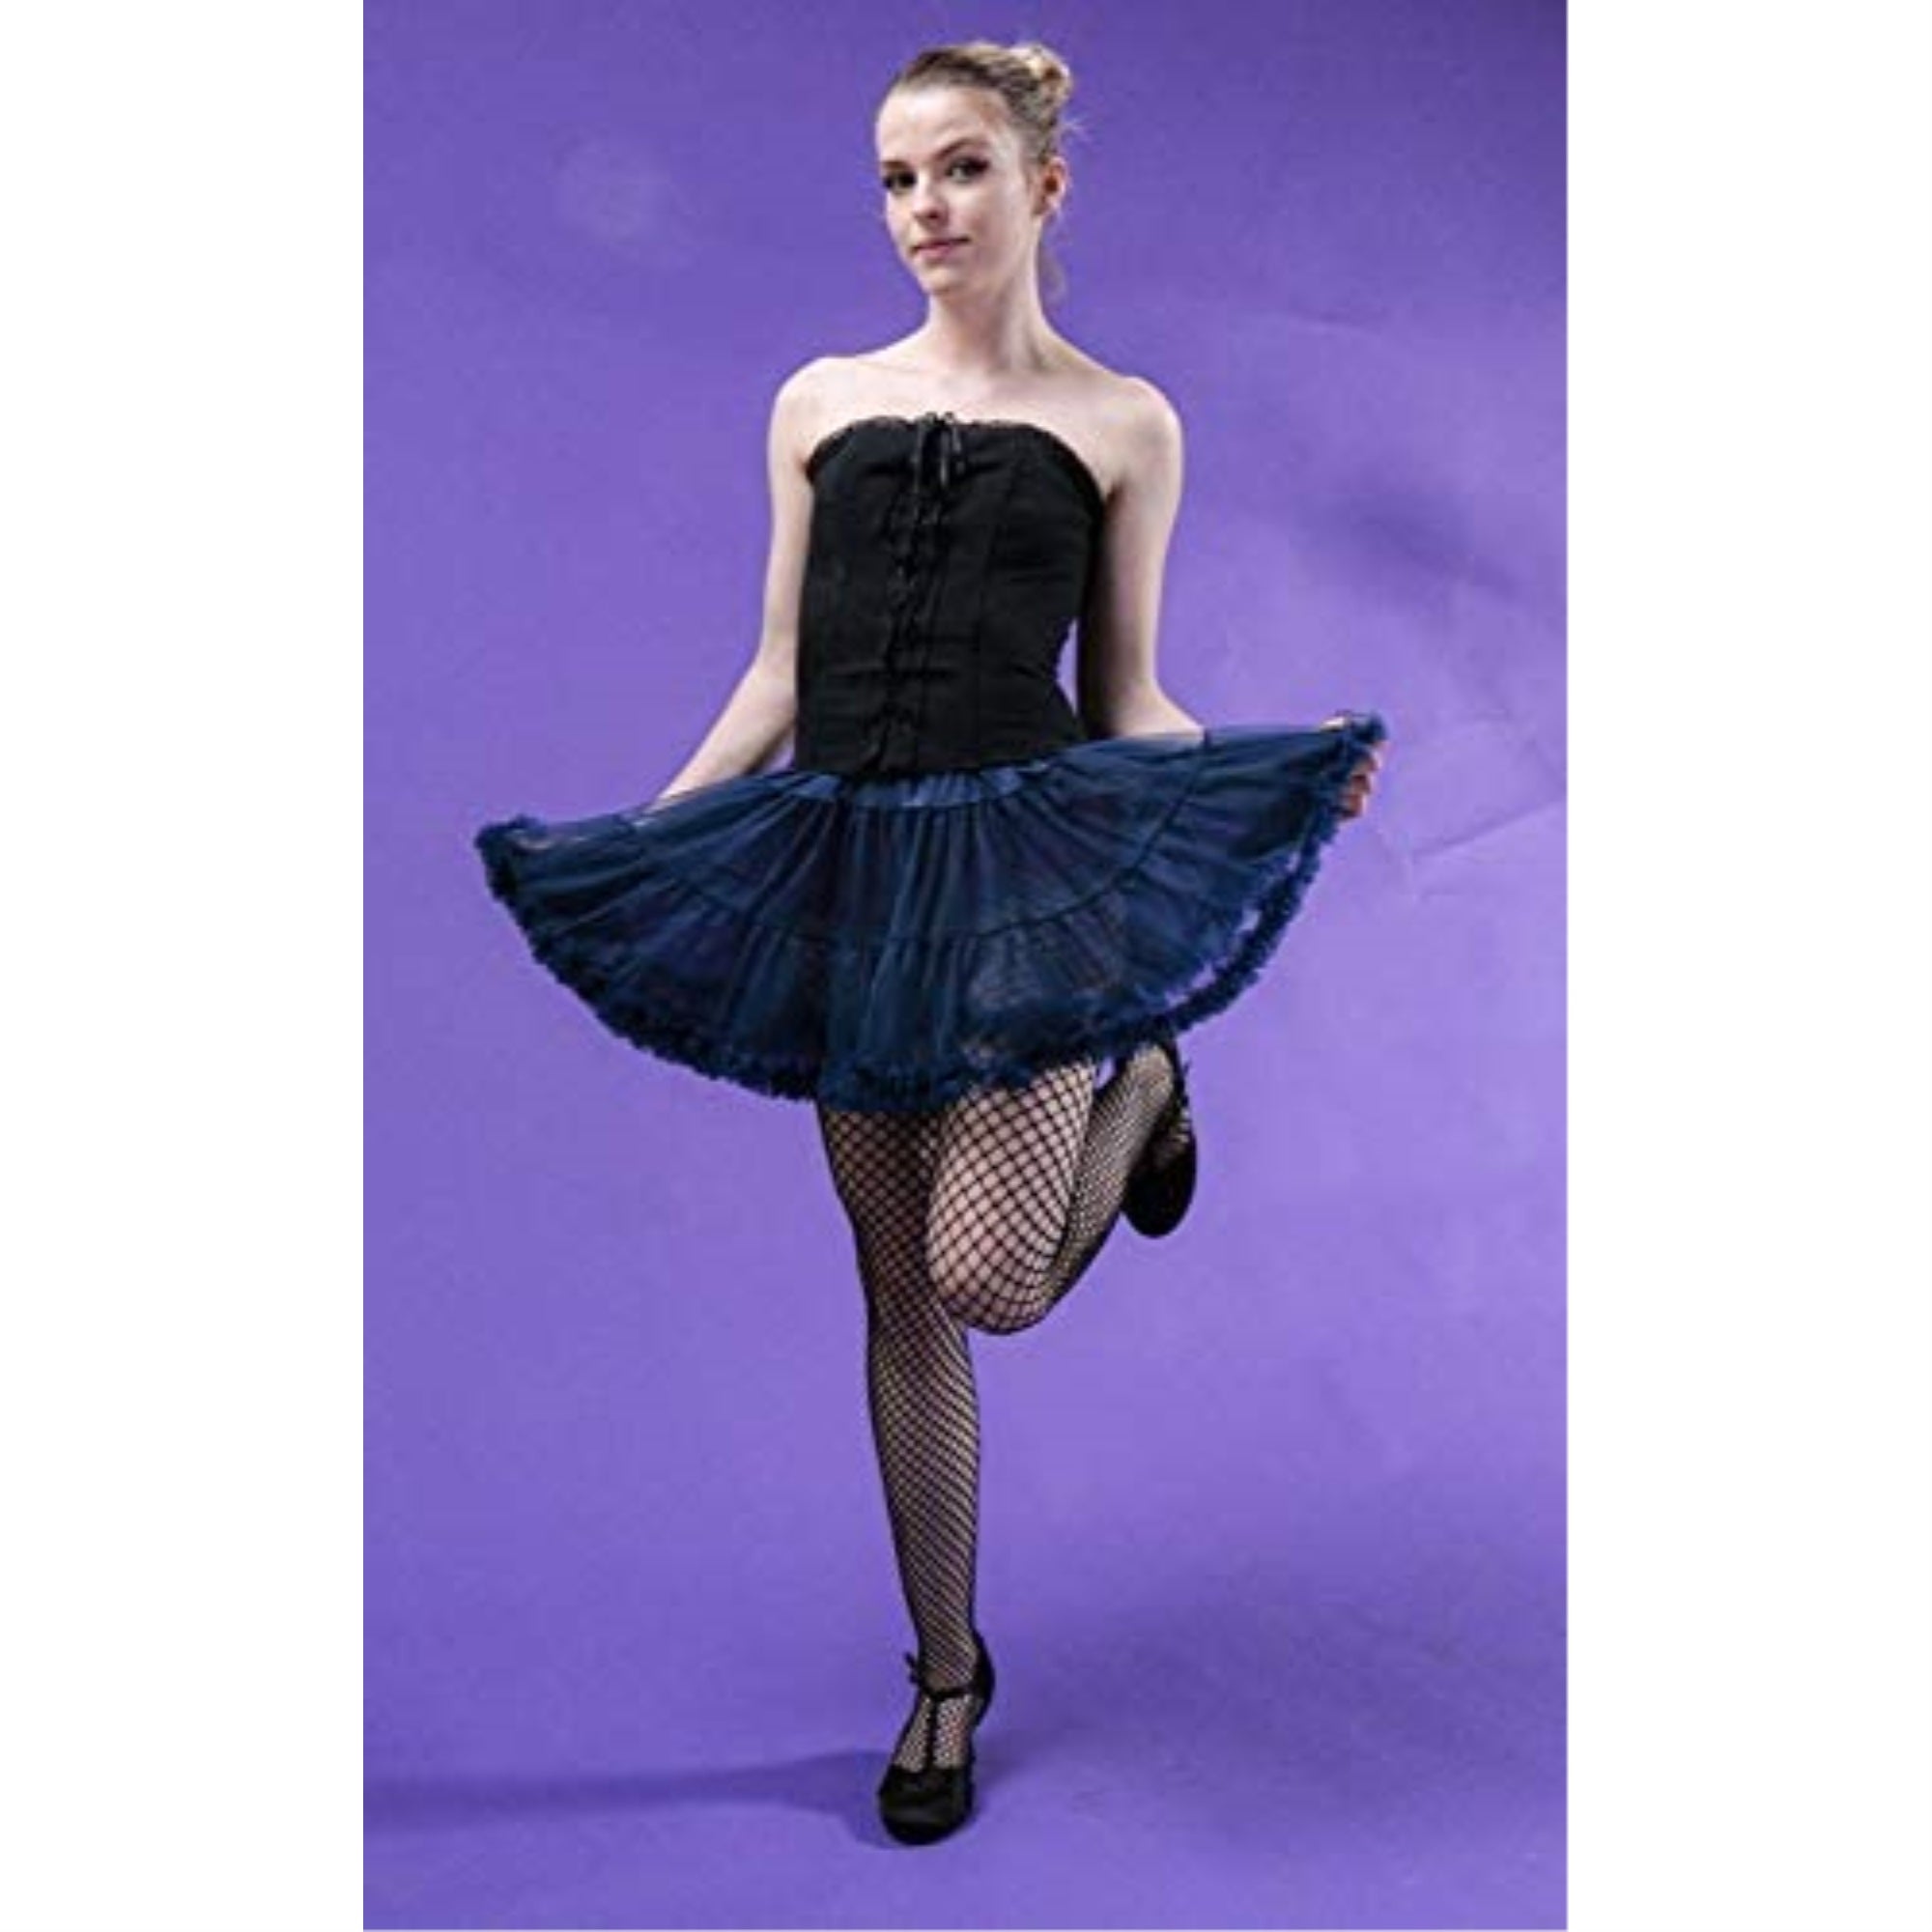 Women's 15in Sexy Tutu Skirt for Halloween & Costume Wear-Navy Blue